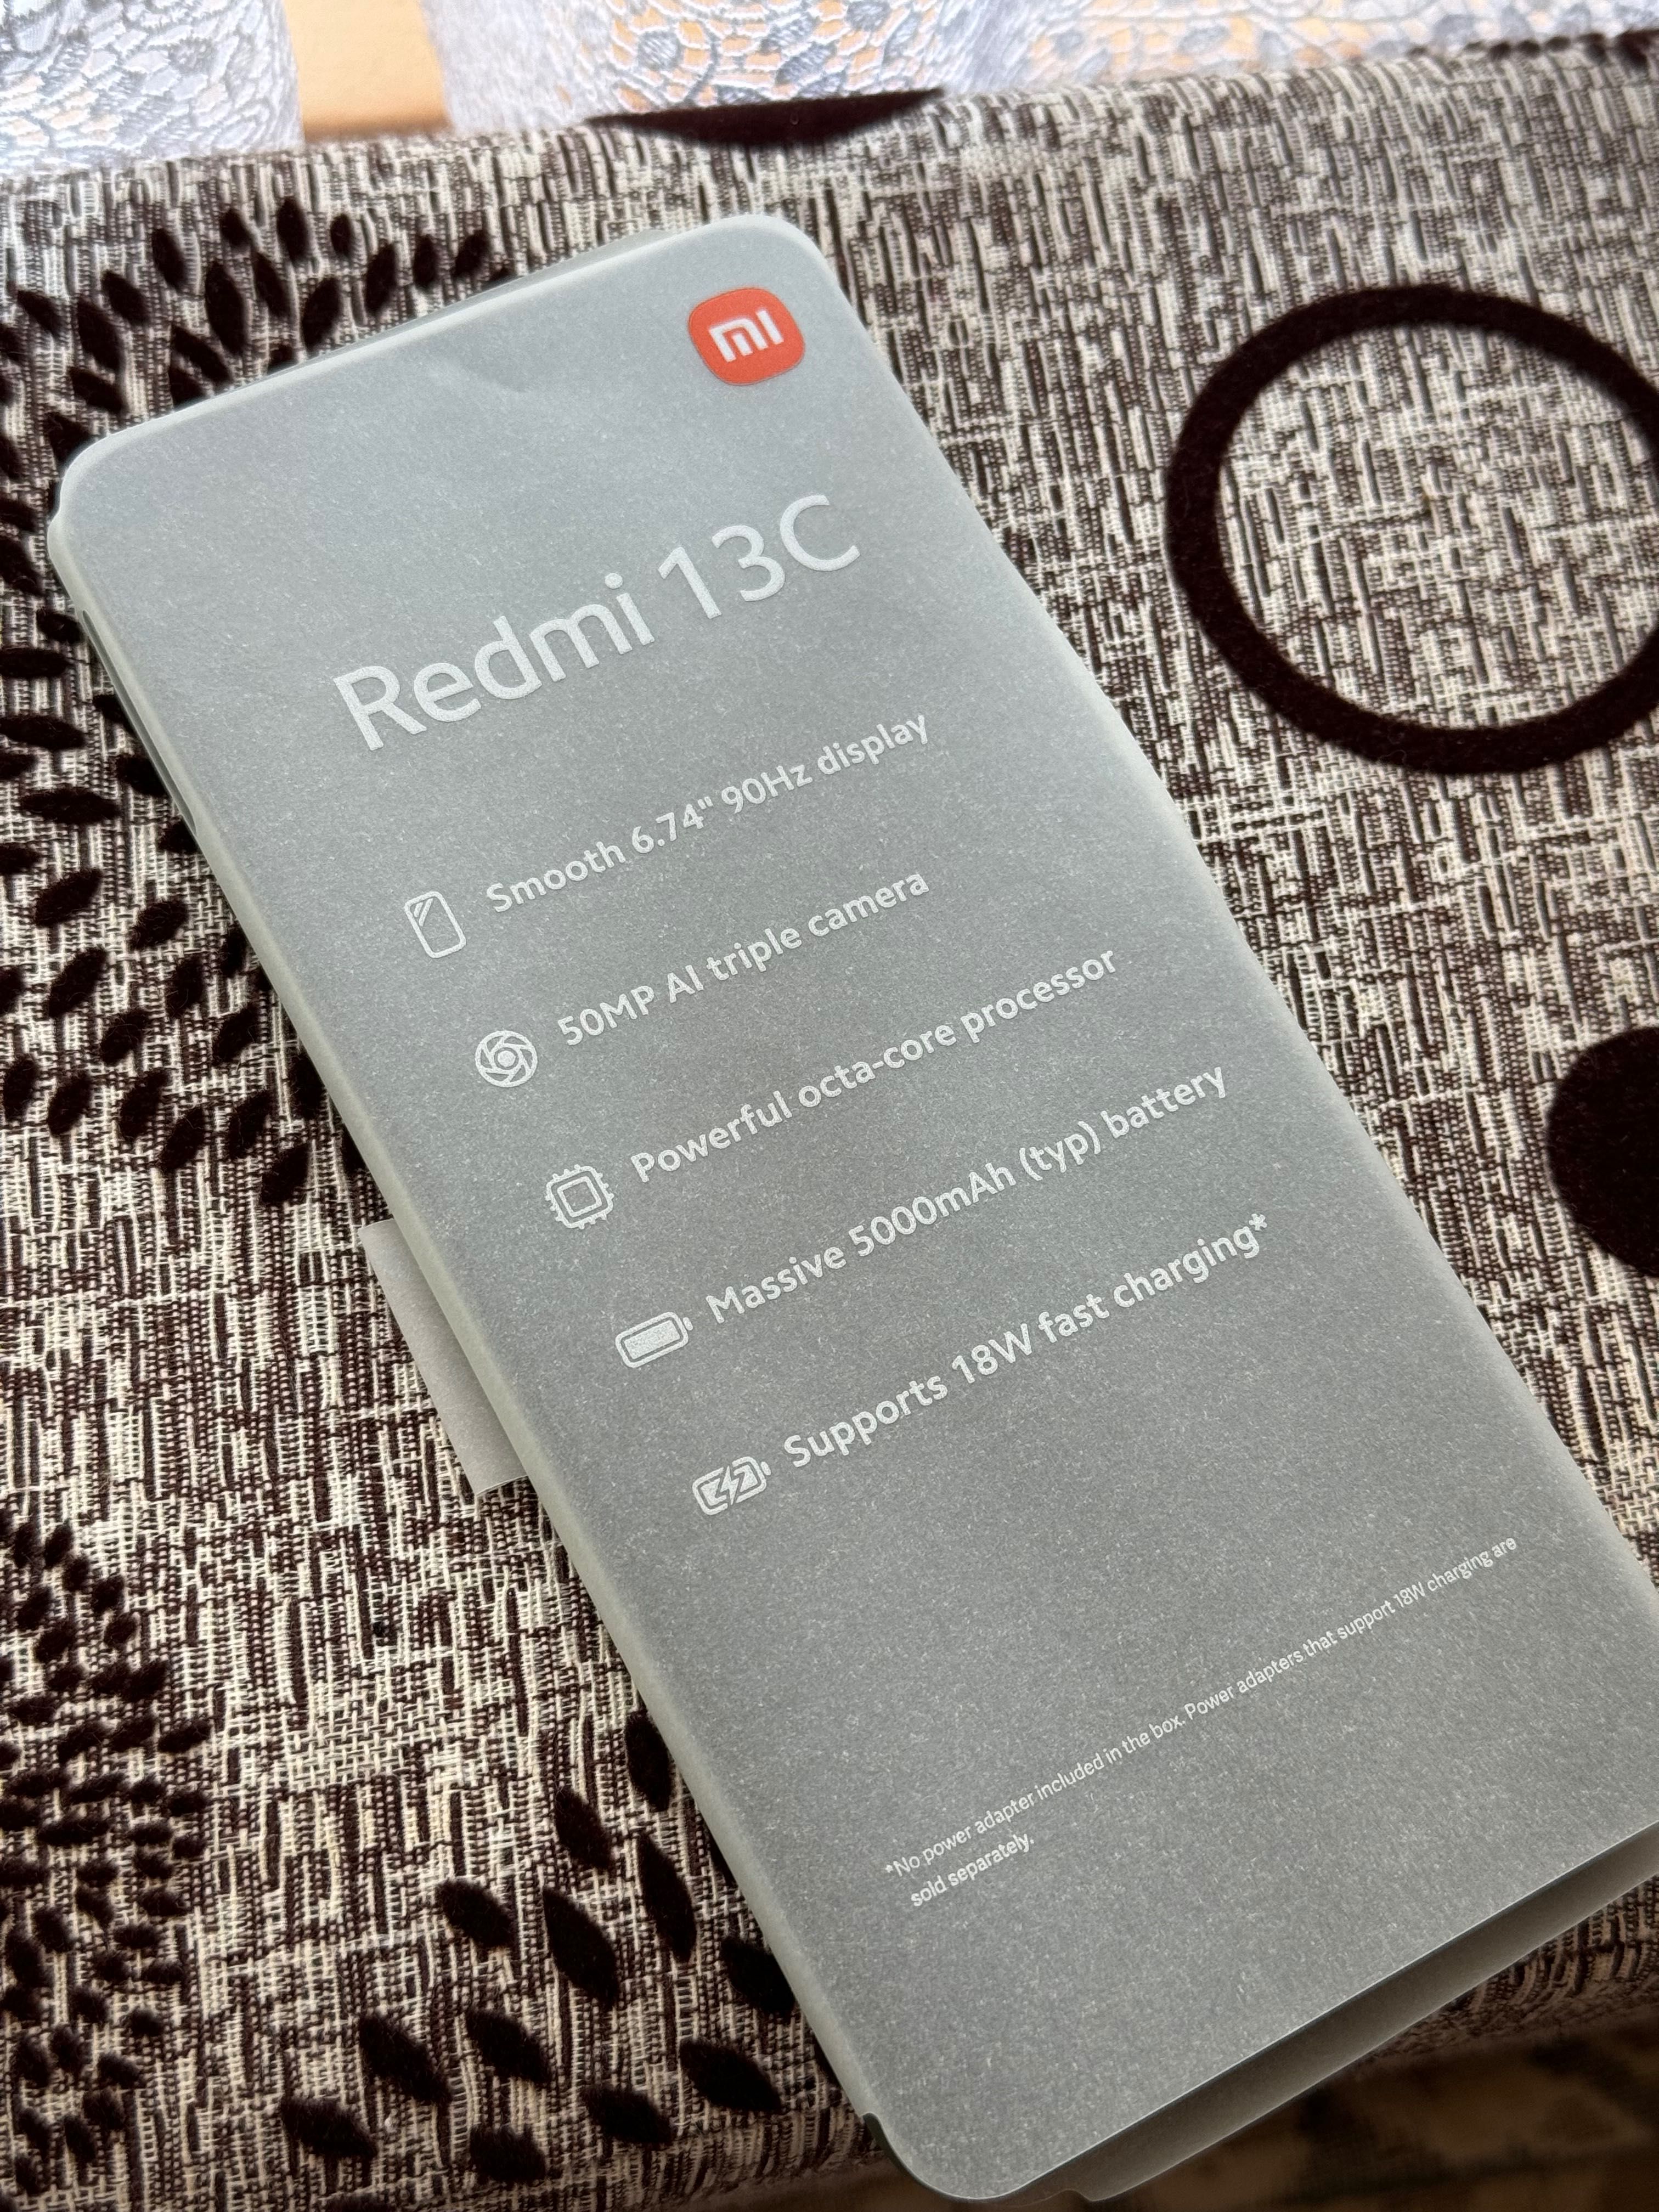 Telefon Redmi 13 C de vânzare